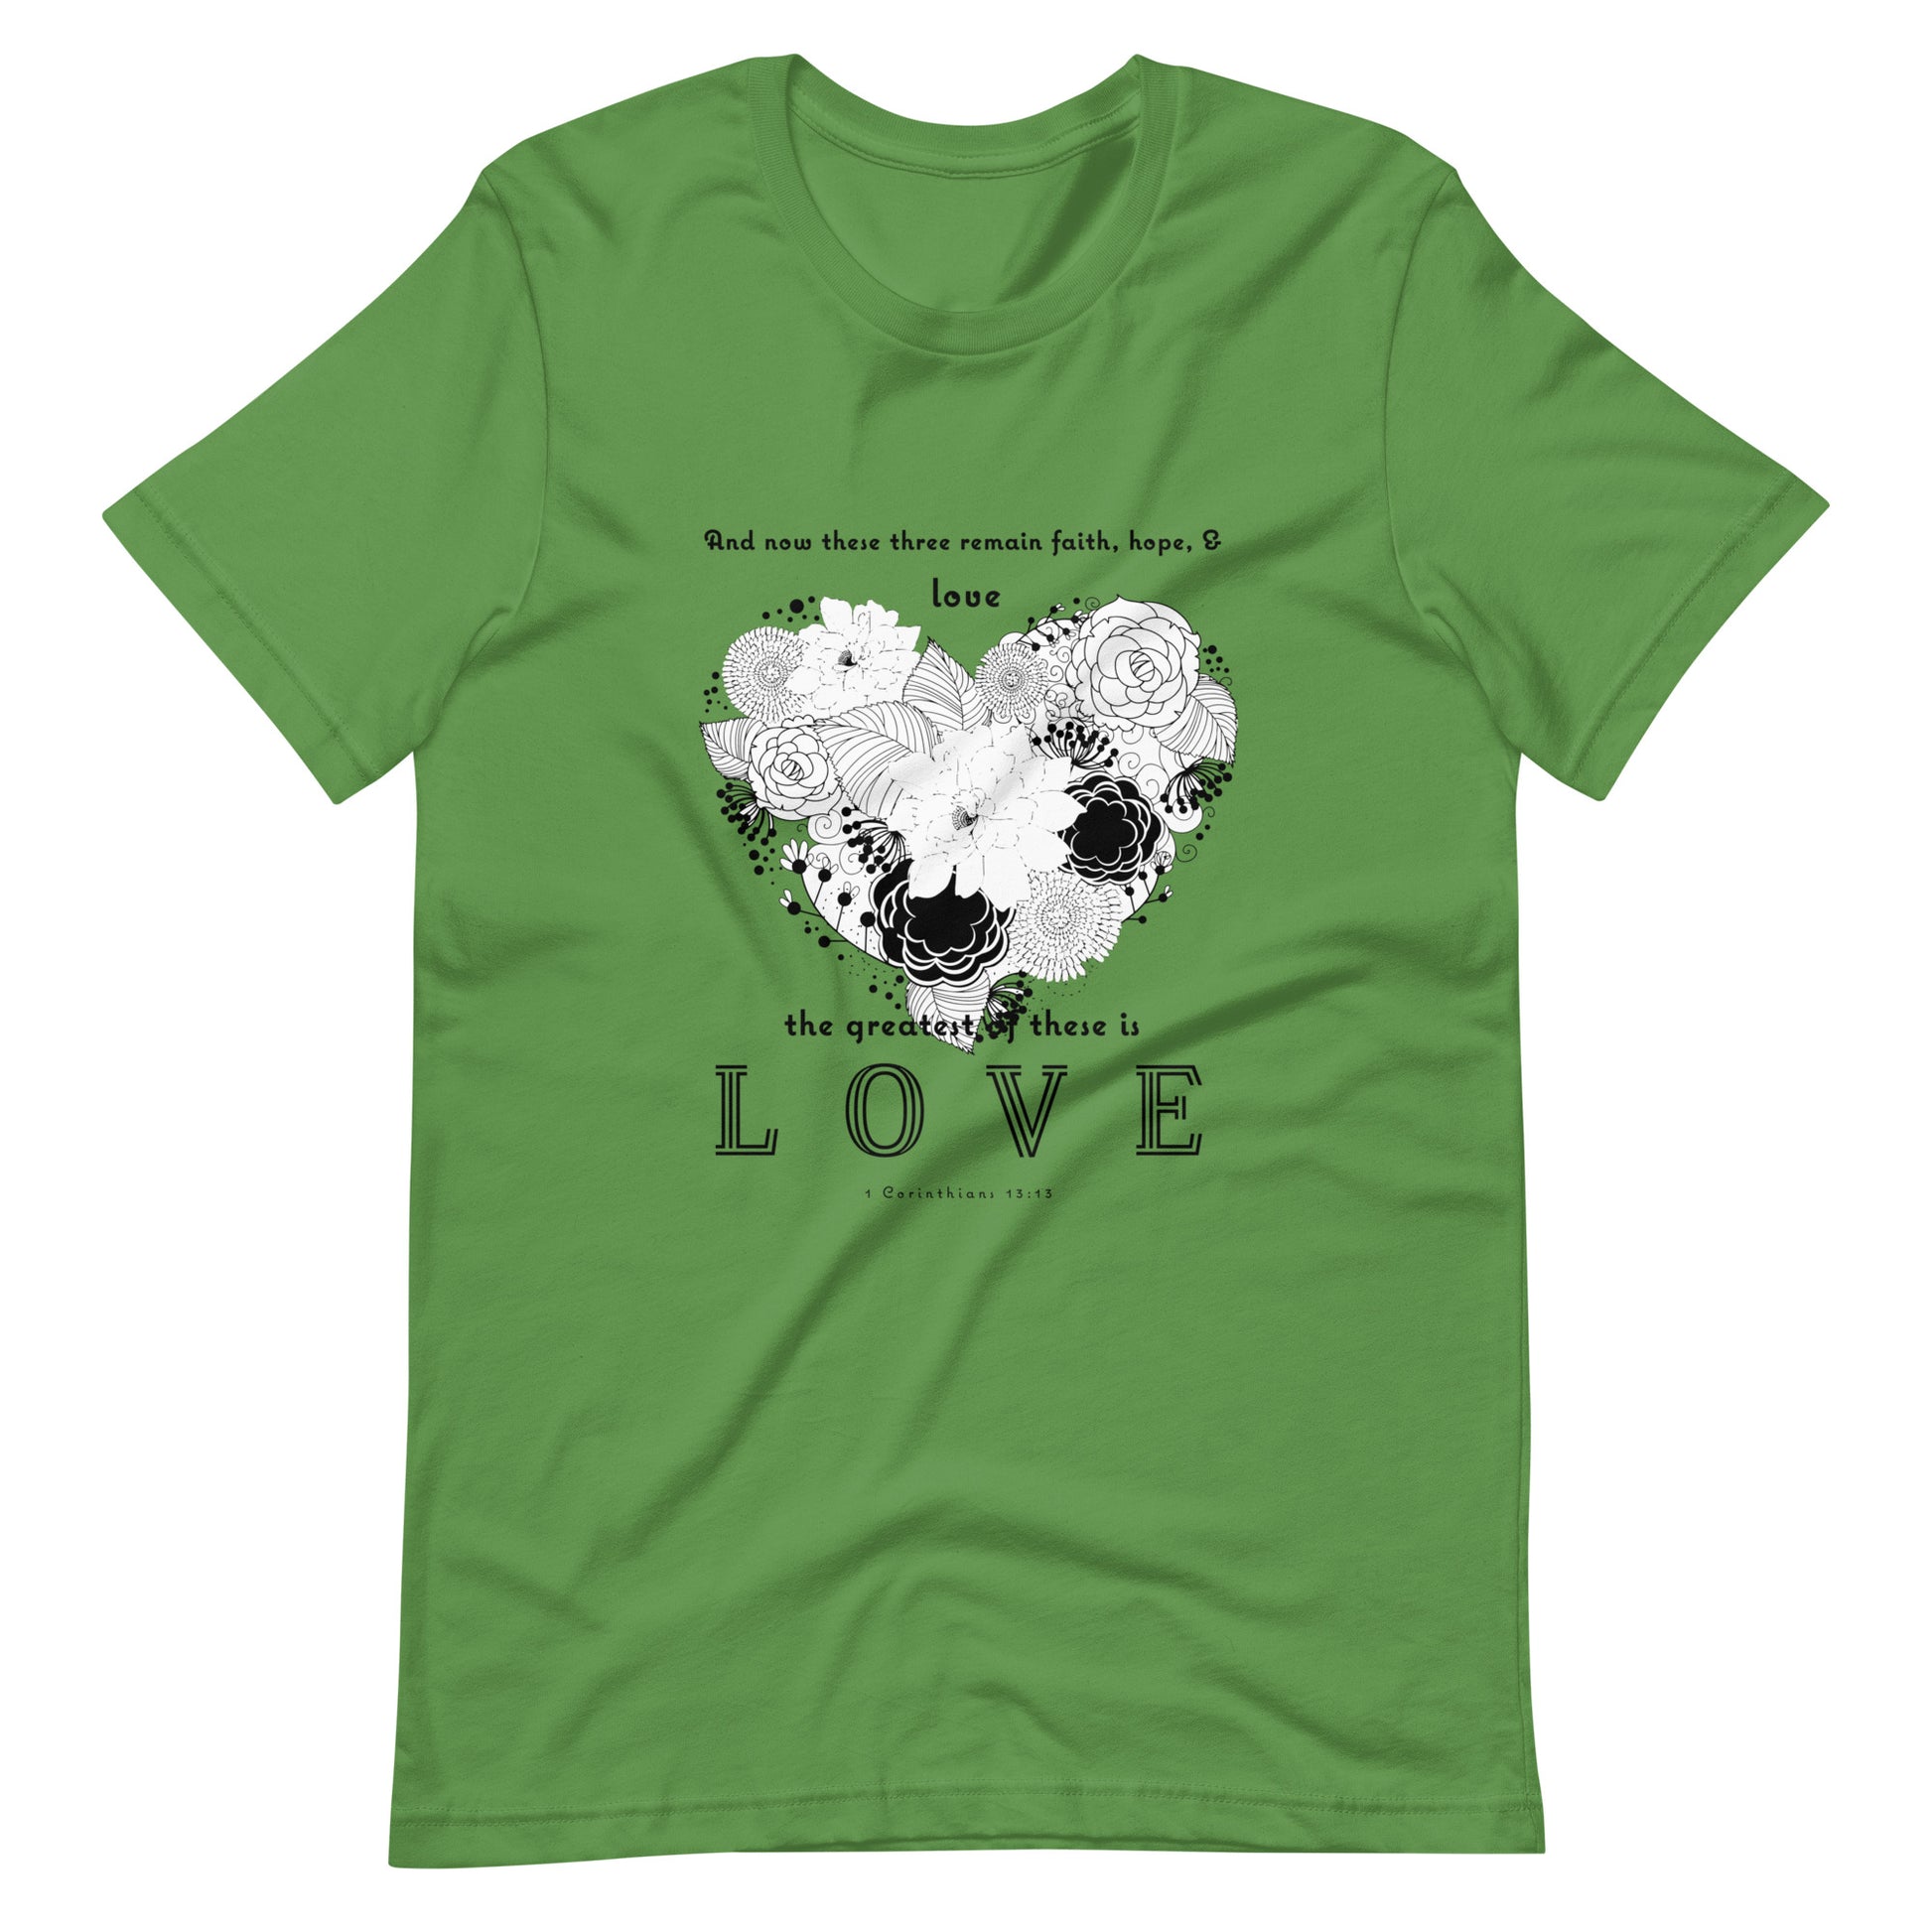 1 Corinthians 13:13 greatest love T-shirt leaf green